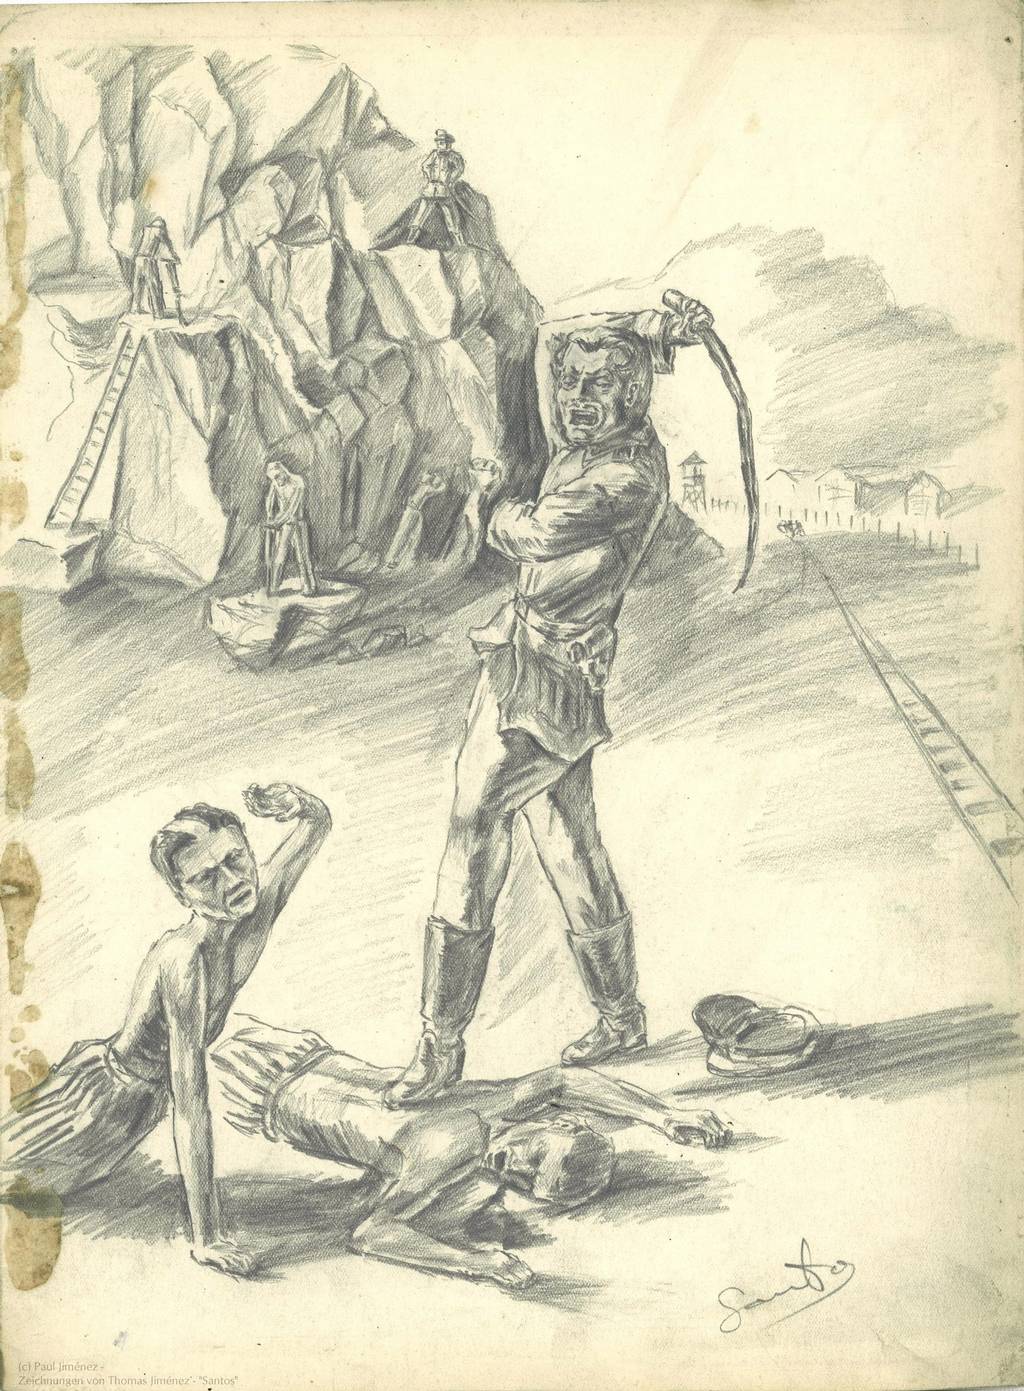 Mistreatment in the quarry, drawing by Tomás Jiménez Santos, between 1946 and 1948 (Paul Jimenez)